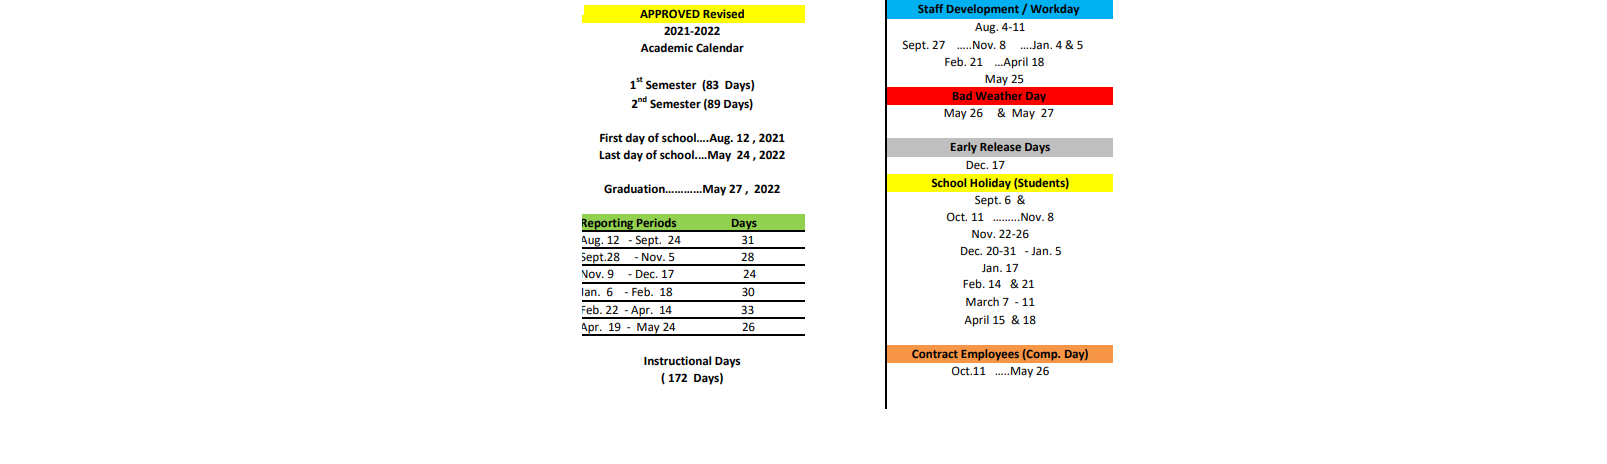 District School Academic Calendar Key for Bosqueville Elementary